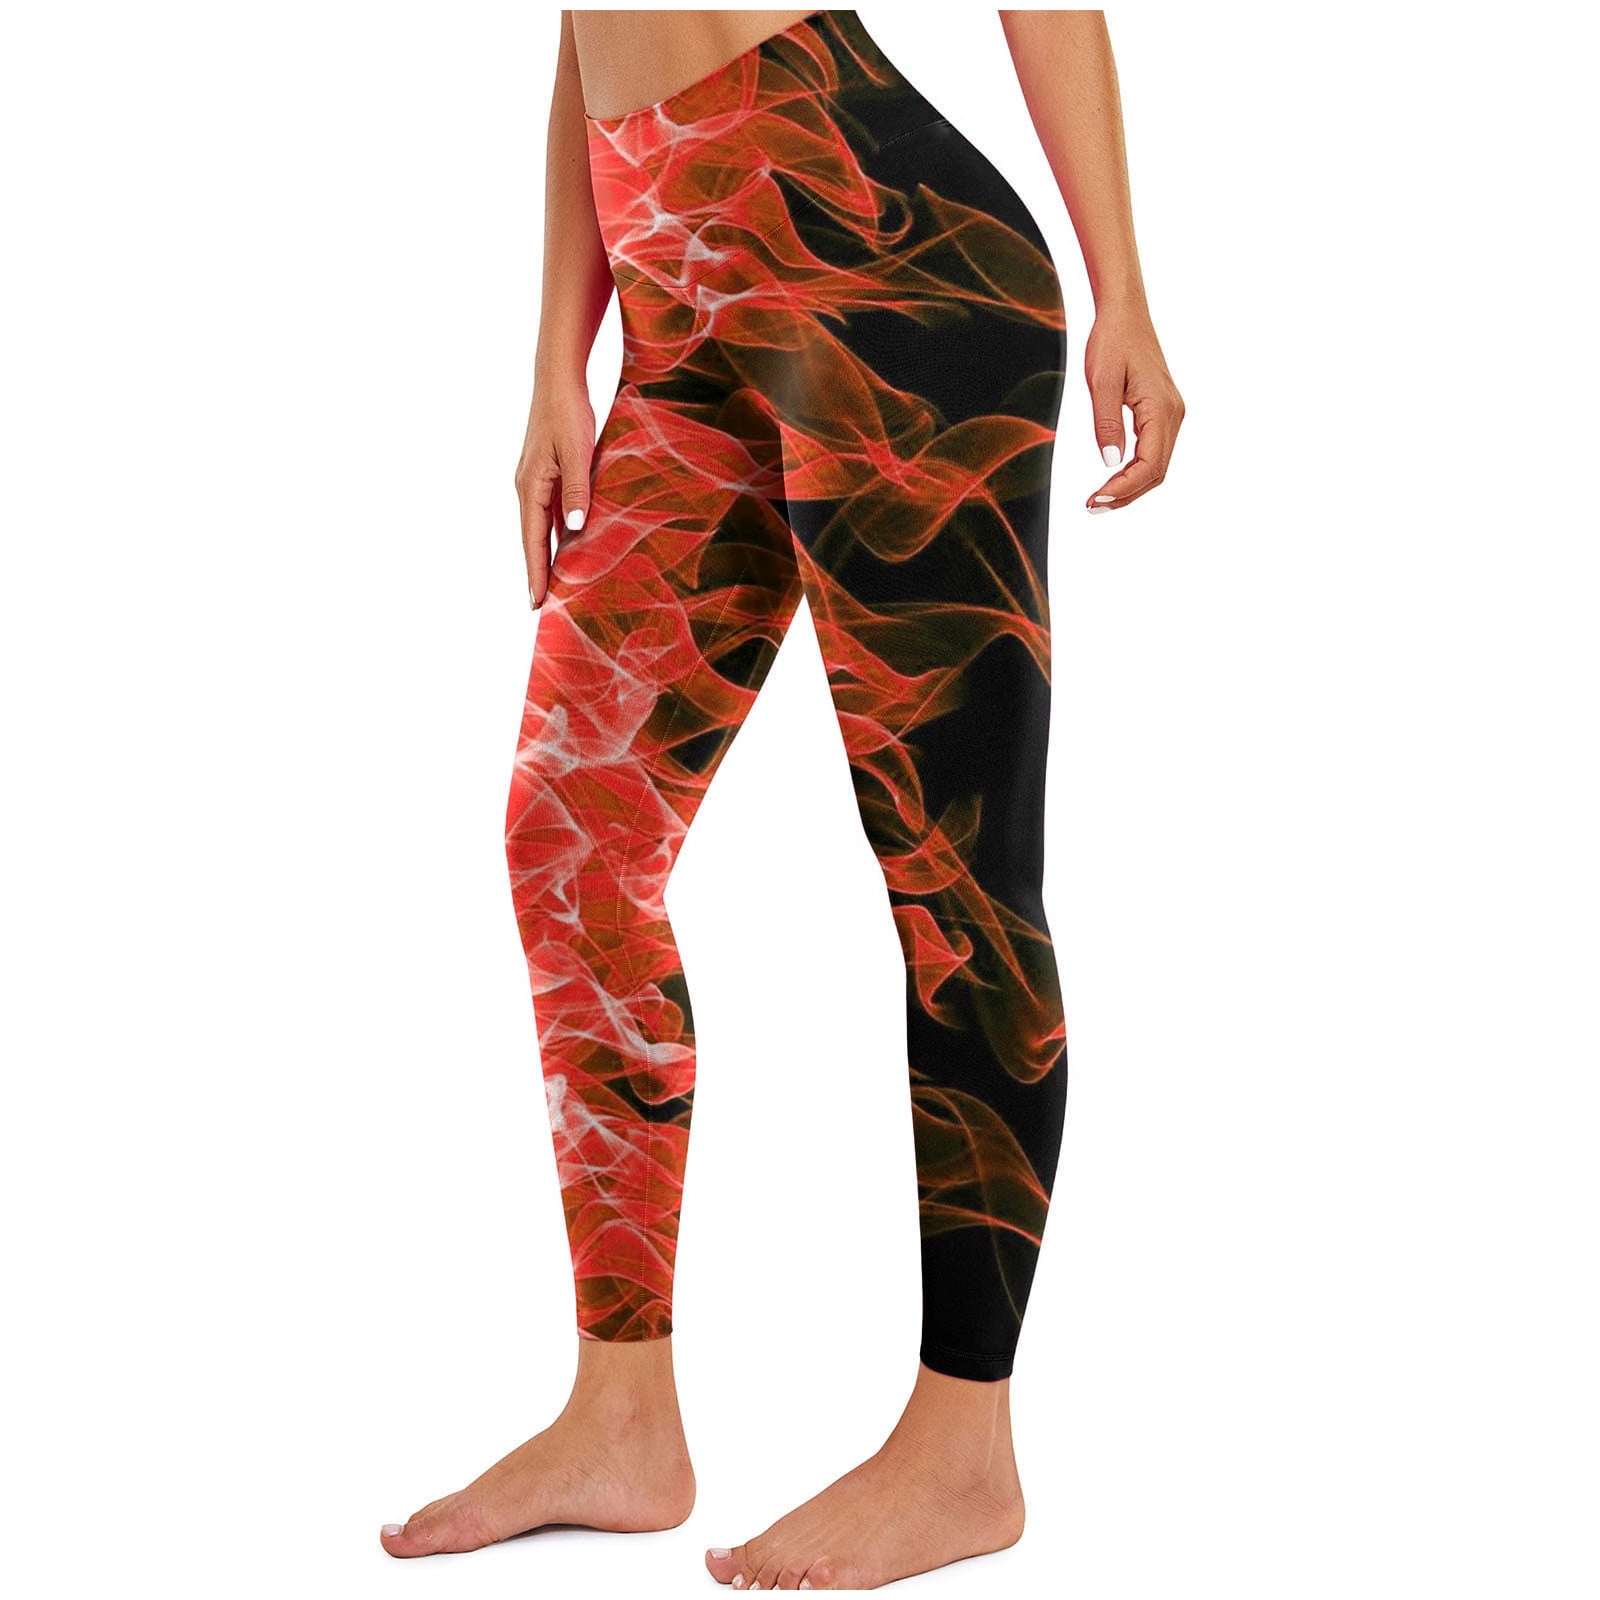 Women's Leggings Pocket Scrunch Butt Butt Lift 4 Way Stretch Yoga Fitness  Running Tights Camo / Camouflage K8452 Camouflage Spandex Sports Activewear  | Fruugo ZA